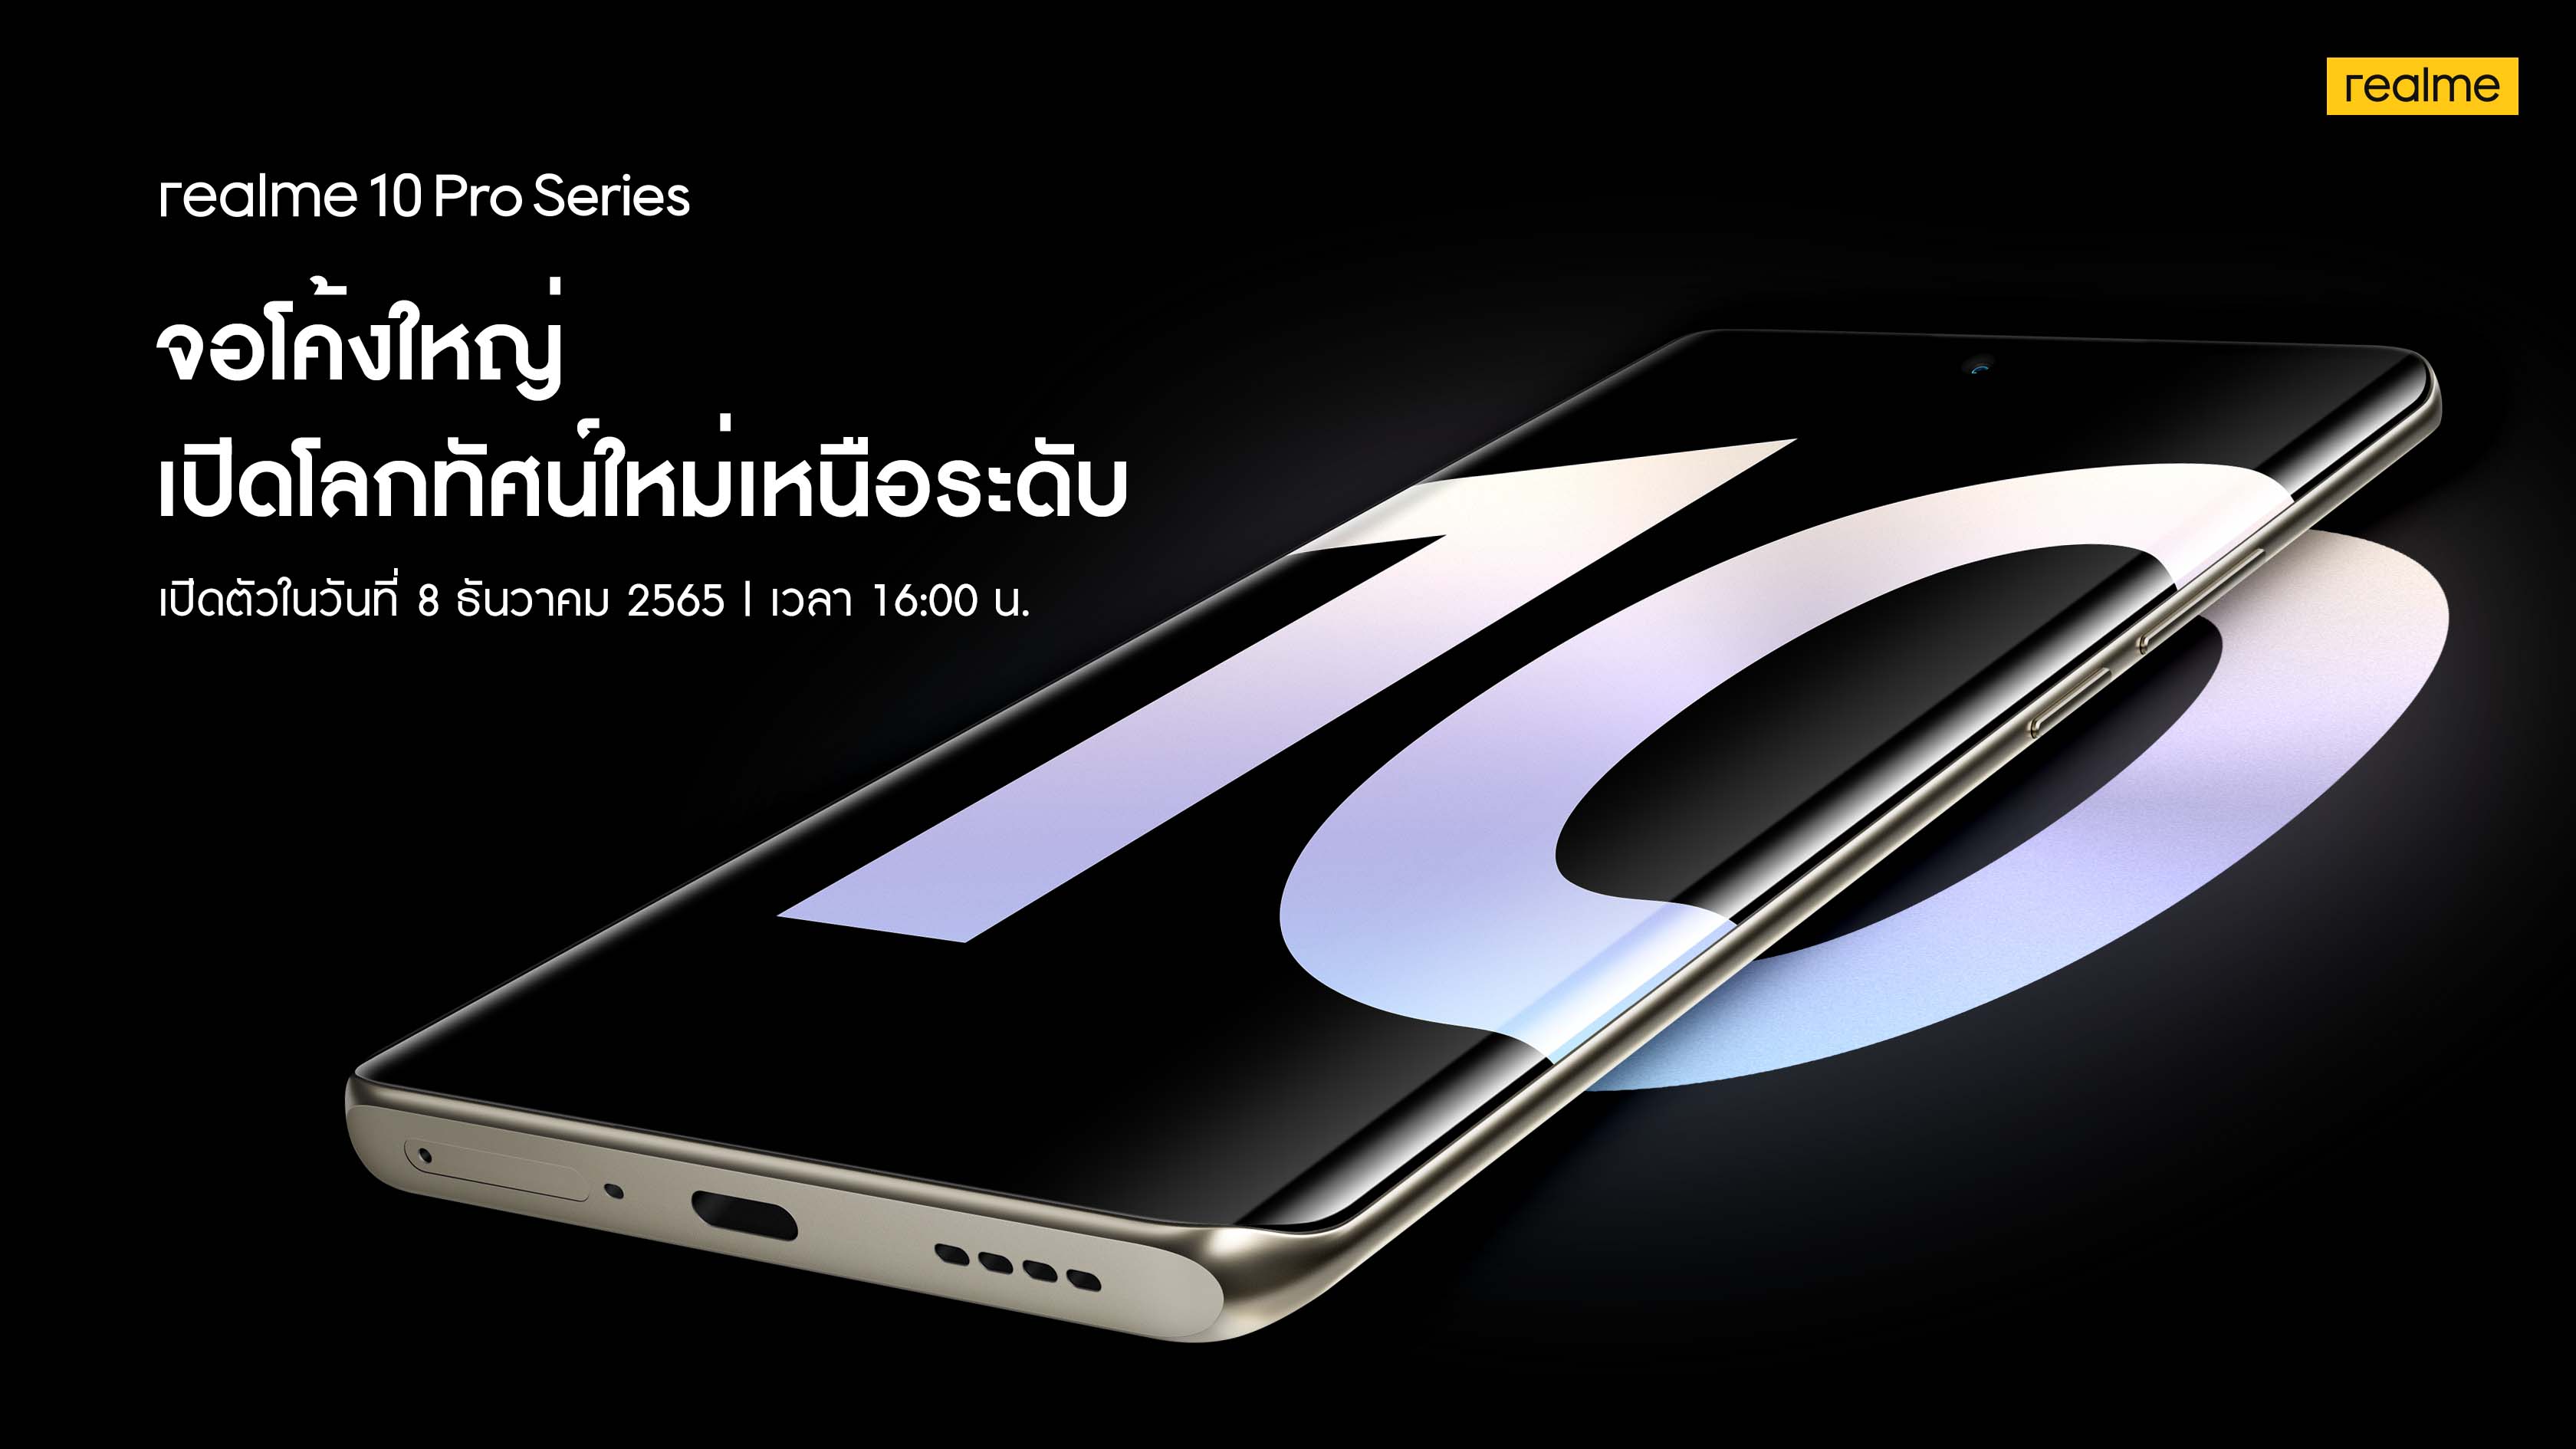 realme 10 Pro Series ตื่นตากับจอโค้งระดับเรือธง 120Hz ครั้งแรกในเซกเมนต์ เตรียมสัมผัสความหรูหราในราคาสุดคุ้มพร้อมกันในไทย 8 ธันวาคมนี้